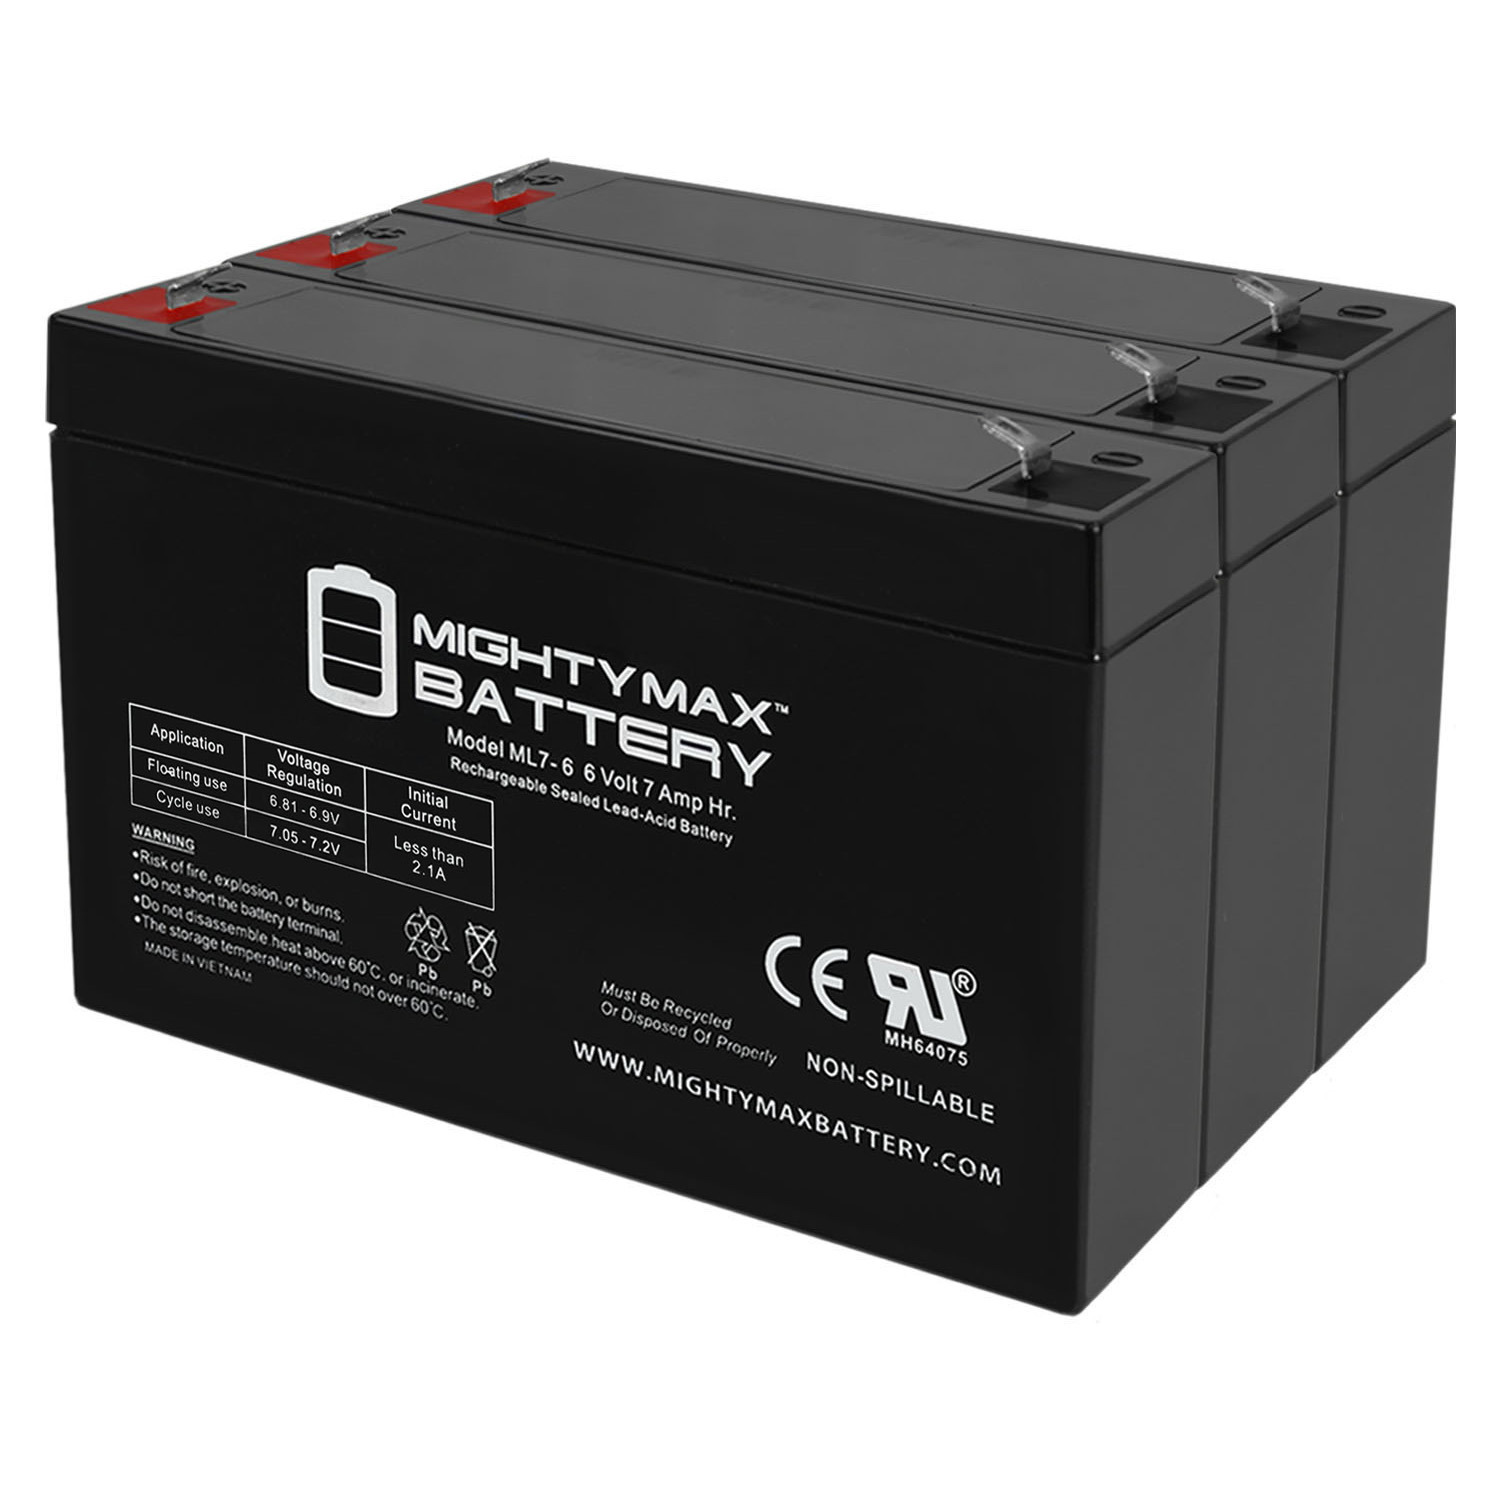 6V 7Ah SLA Replacement Battery for Elan ST2 - 3 Pack